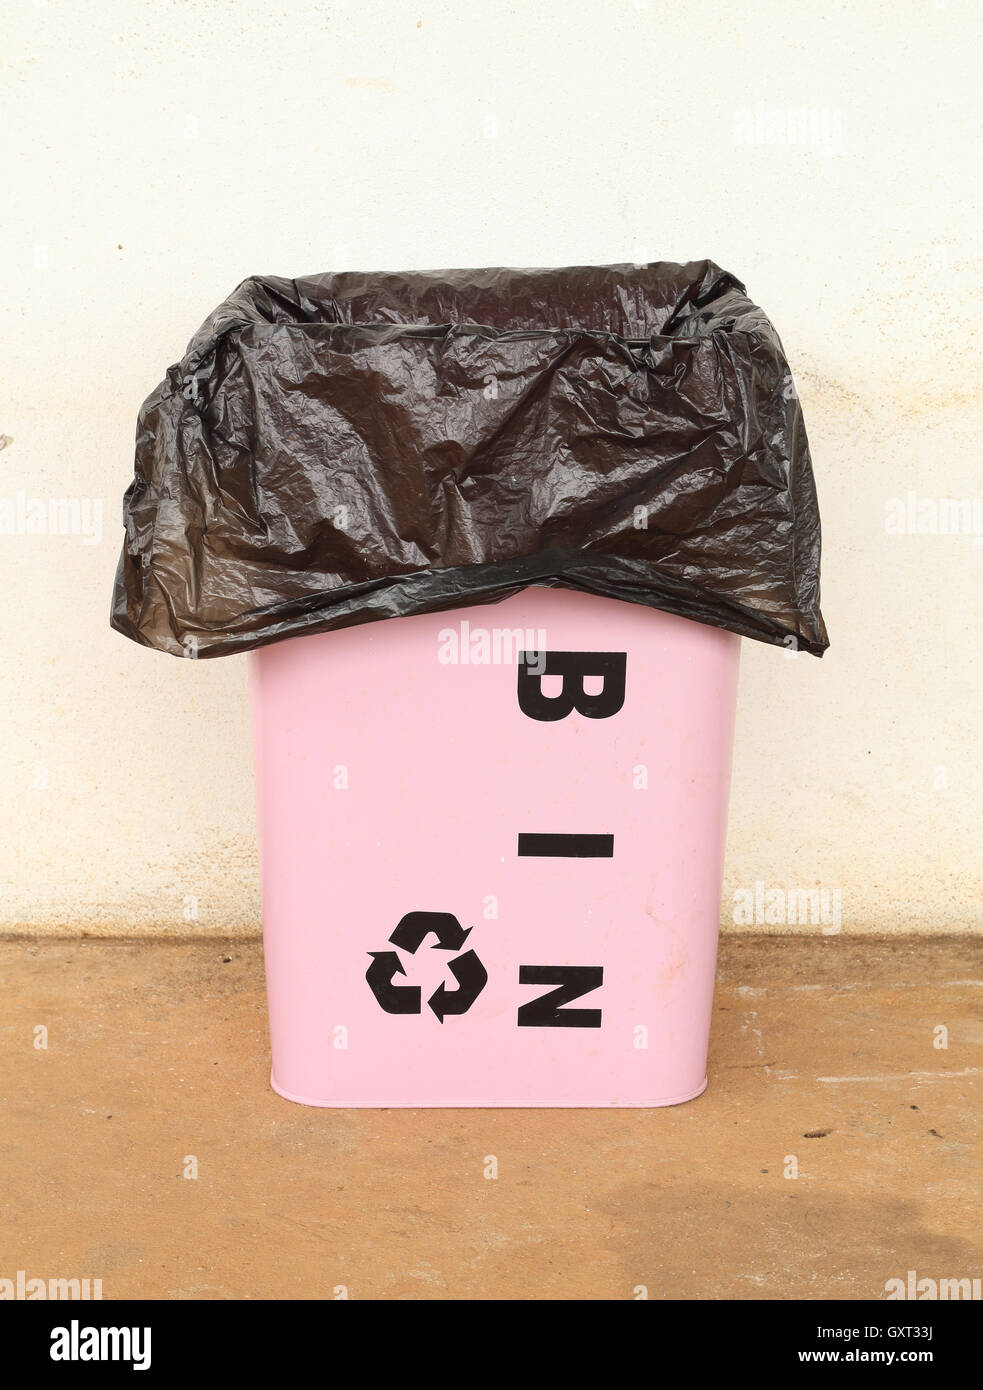 Pink Plastic Garbage Bags Stock Photo - Alamy